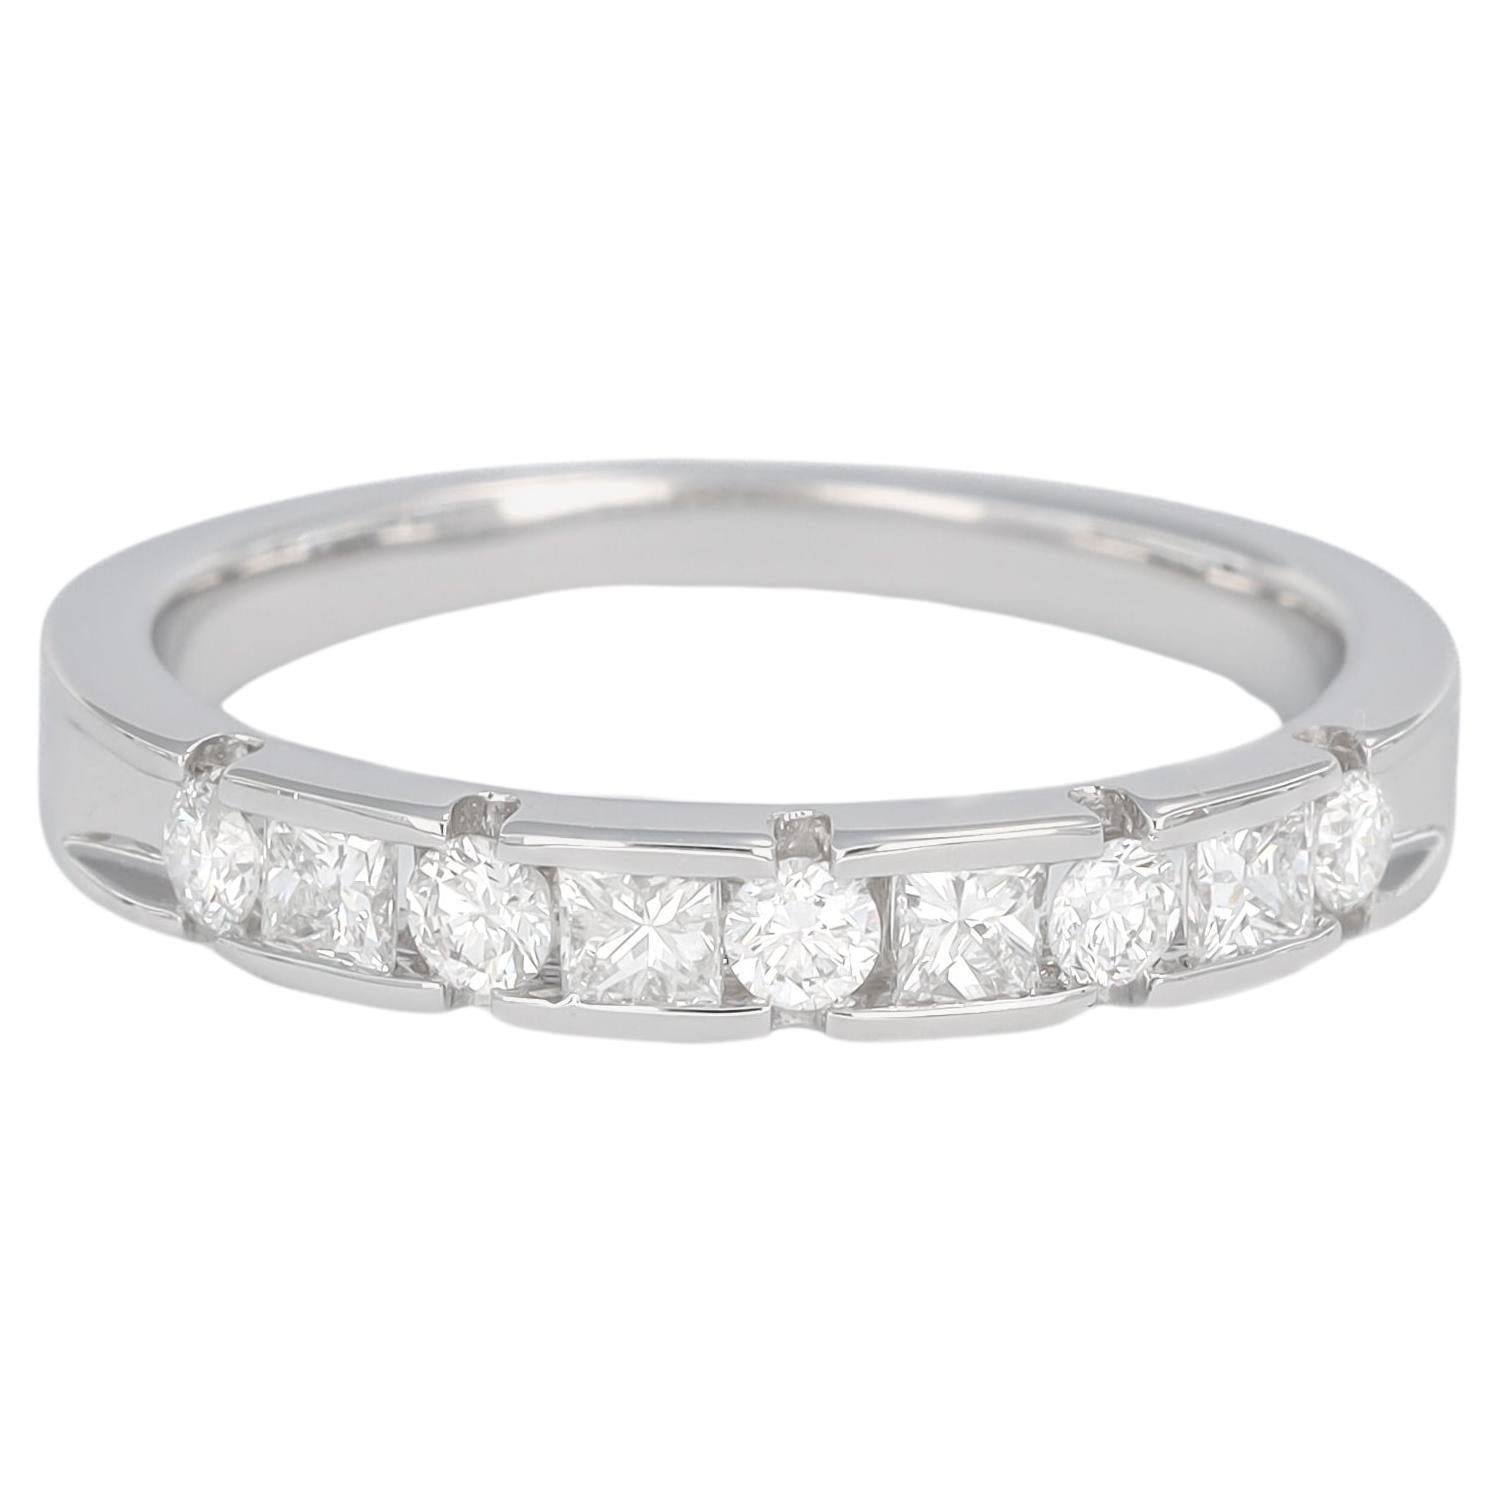 Natural Diamond 0.52 carats 18KT White Gold Princess Half Eternity Band Ring 